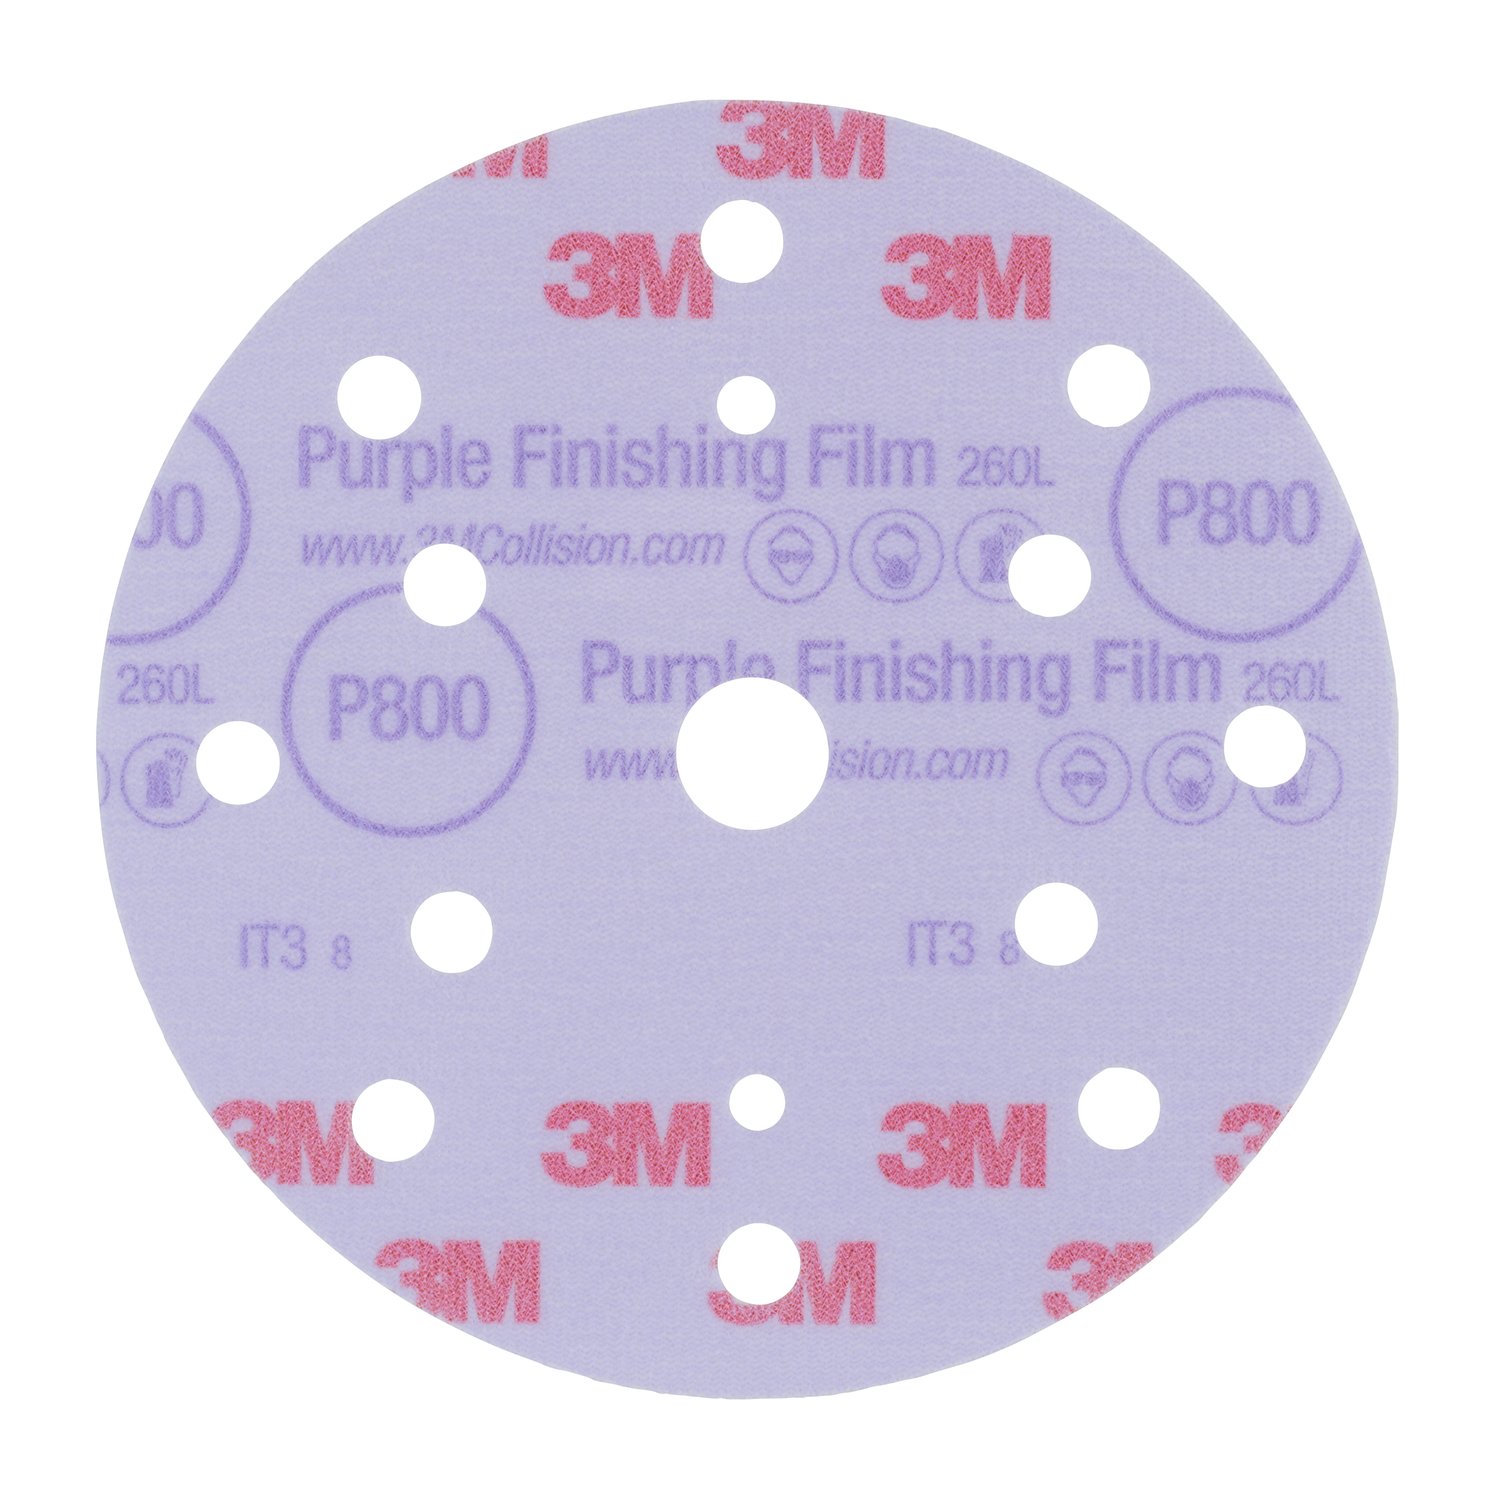 7100123753 - 3M Purple Finishing Film Hookit 260L Disc Dust-Free, 51155, 6
in, P800, 50 discs per carton, 4 cartons per case